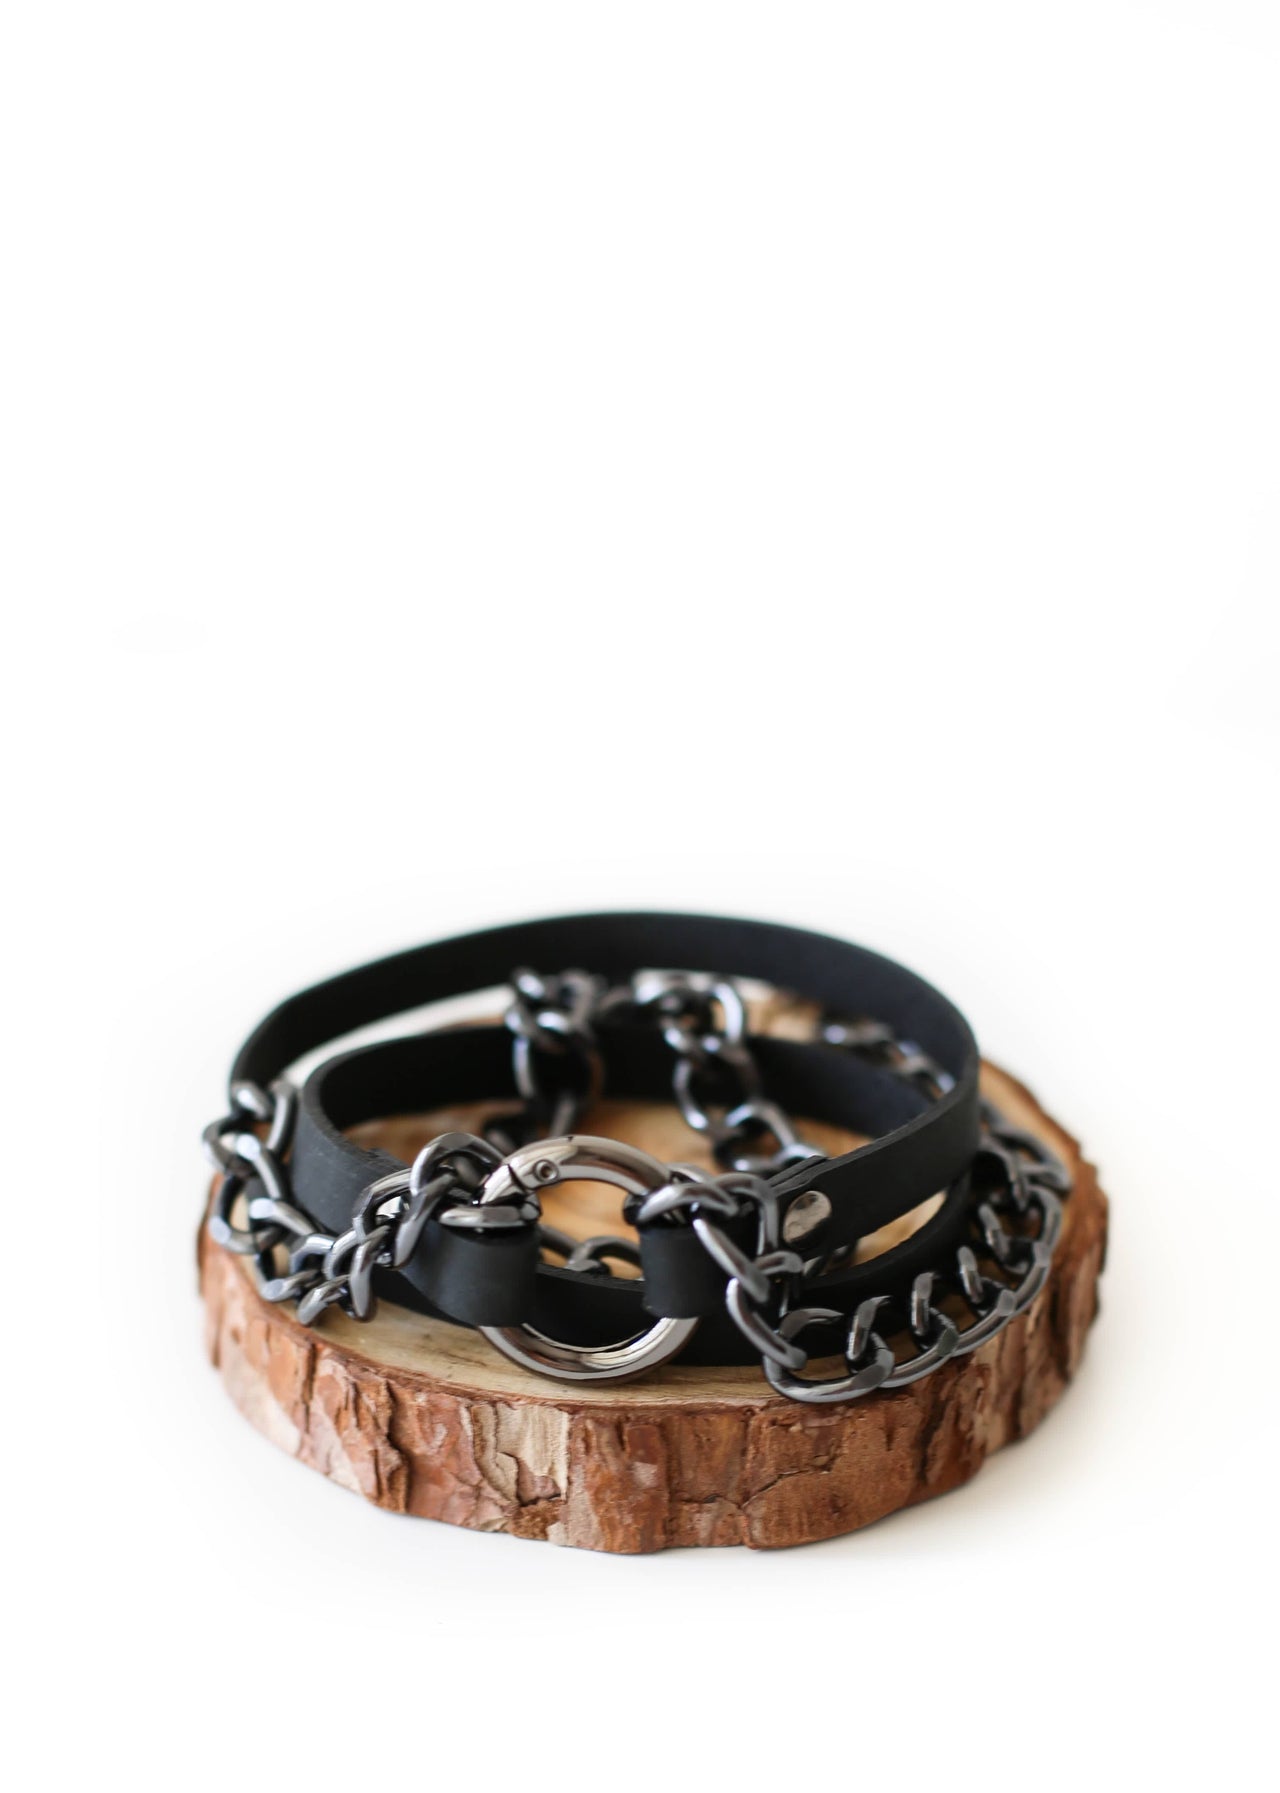 https://cdn.shopify.com/s/files/1/0030/6597/0758/products/small-ring-black-leather-bracelet-w-black-chain-29770046701745.jpg?v=1652193918&width=1280